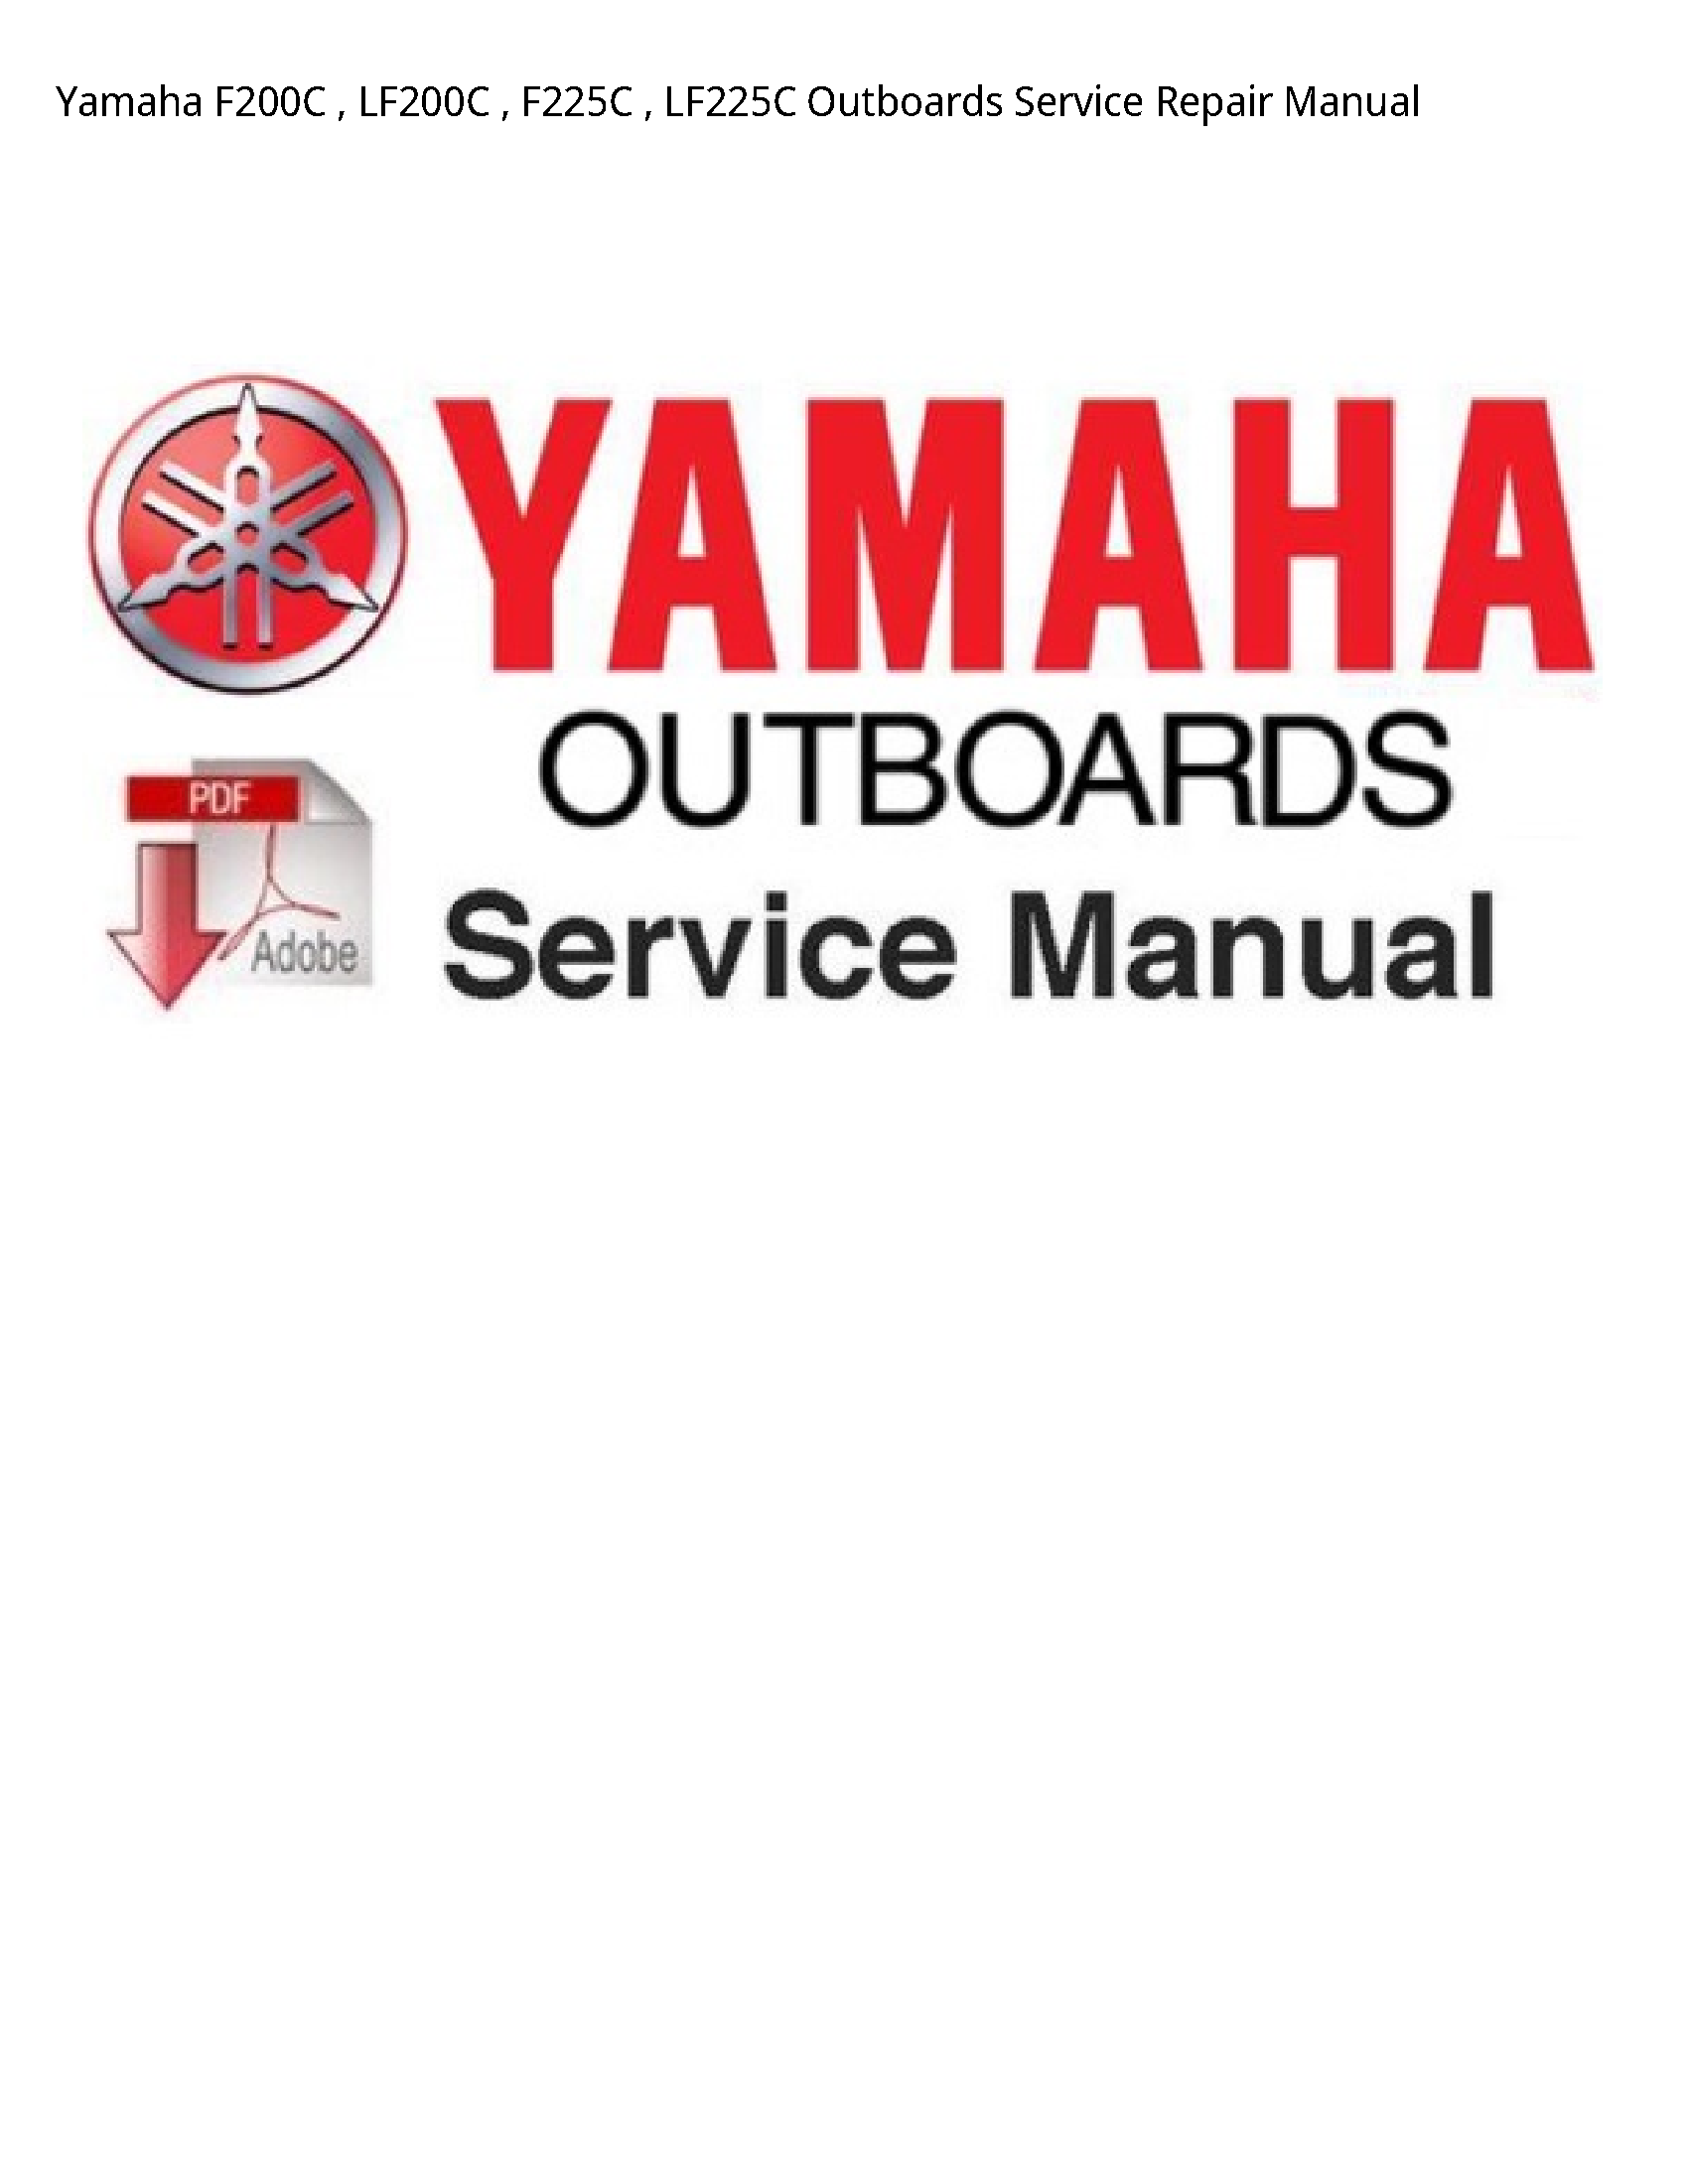 Yamaha F200C Outboards manual